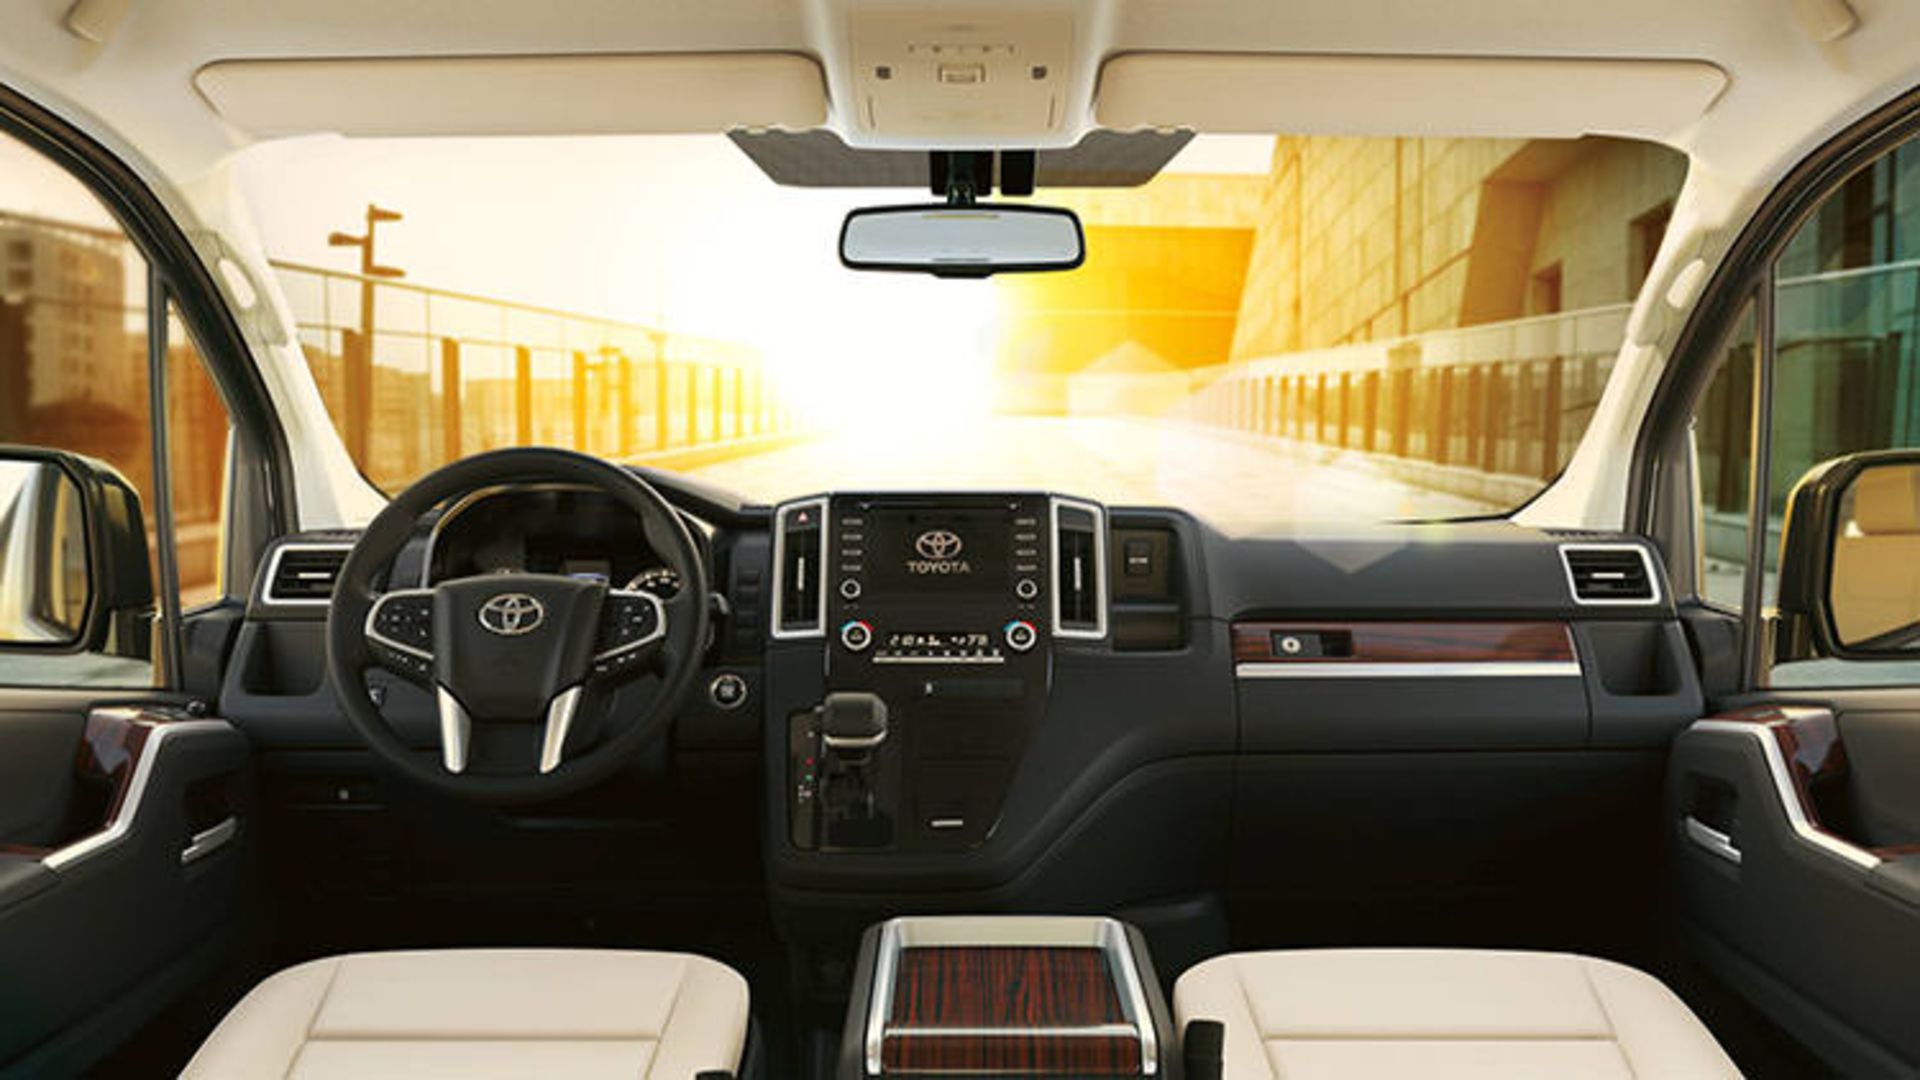 مرجع متخصصين ايران Toyota Granvia Luxury Minivan / ميني ون لوكس تويوتا گرنويا